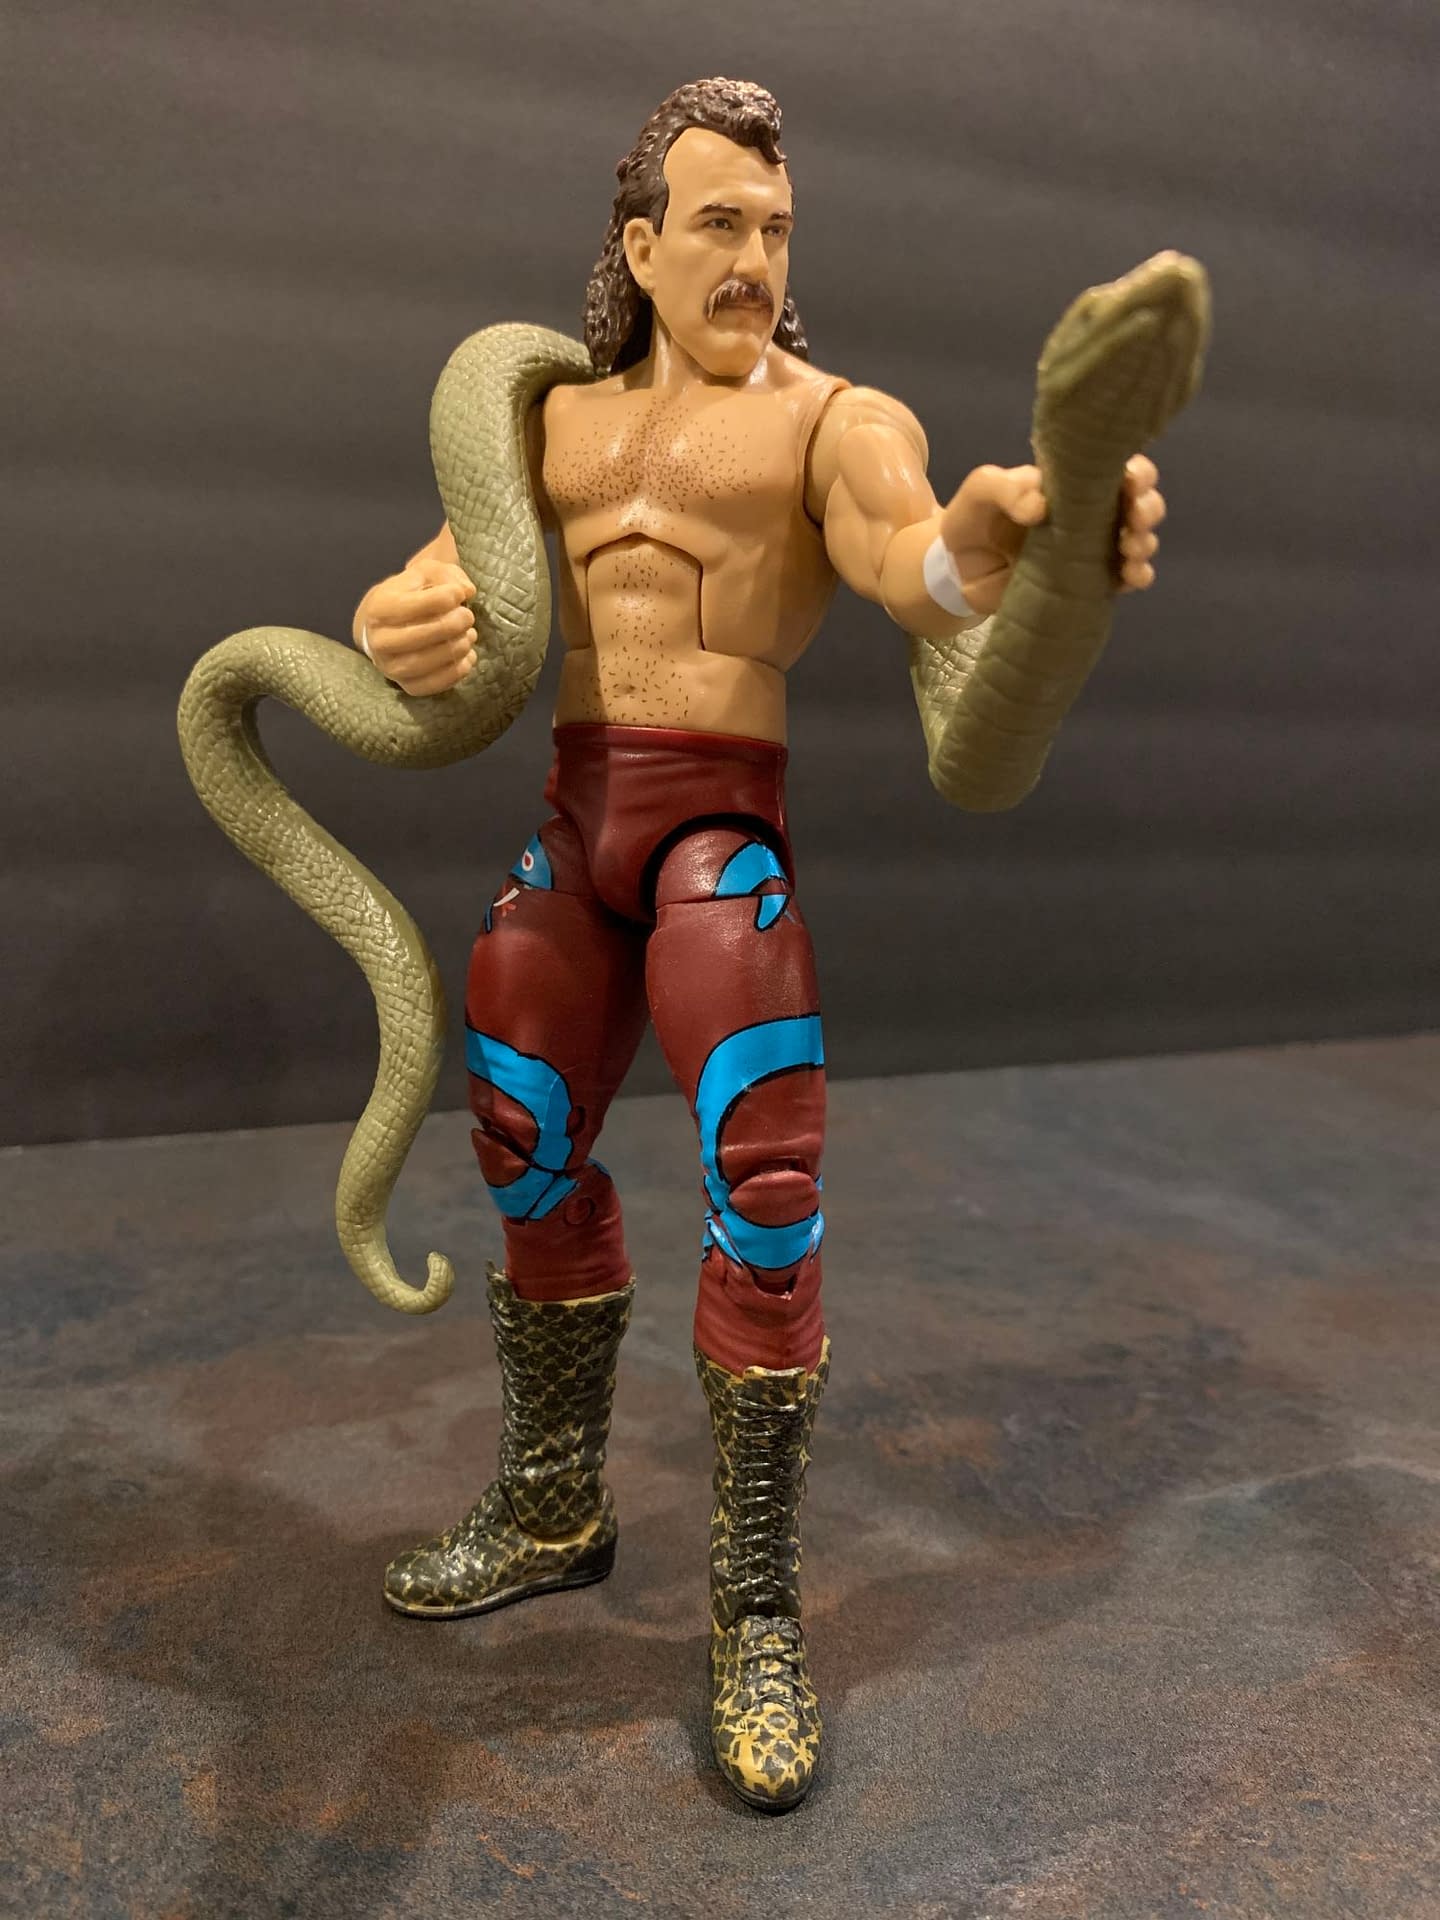 Let's Take A Look At Mattel's New WWE Elite Legends Jake The Snake